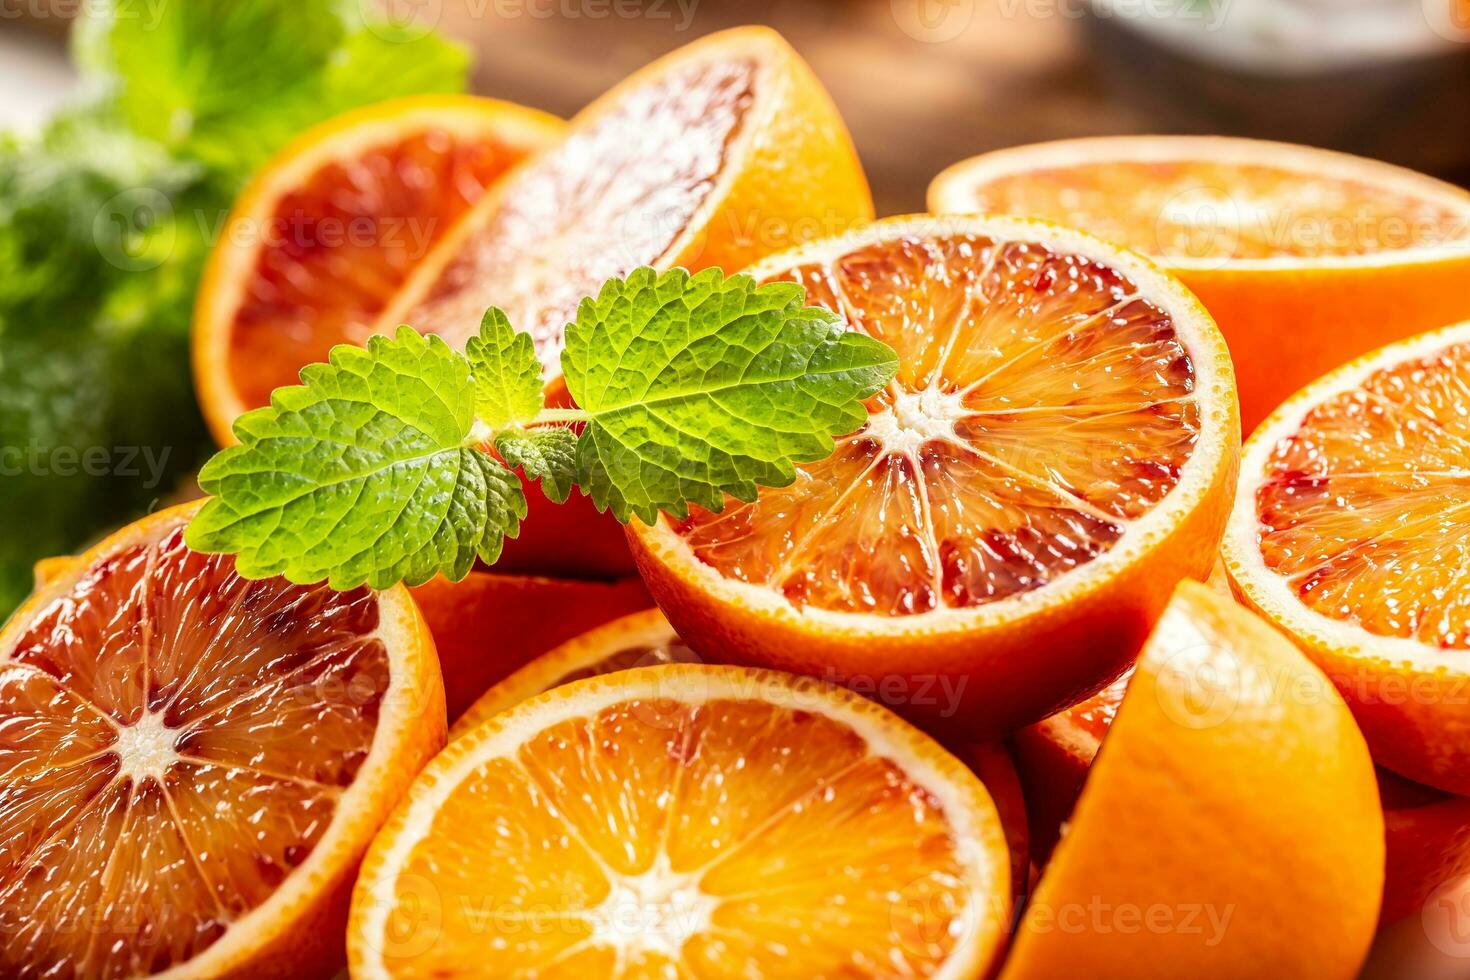 Blood sicilian oranges sliced with fresh melissa - close up photo